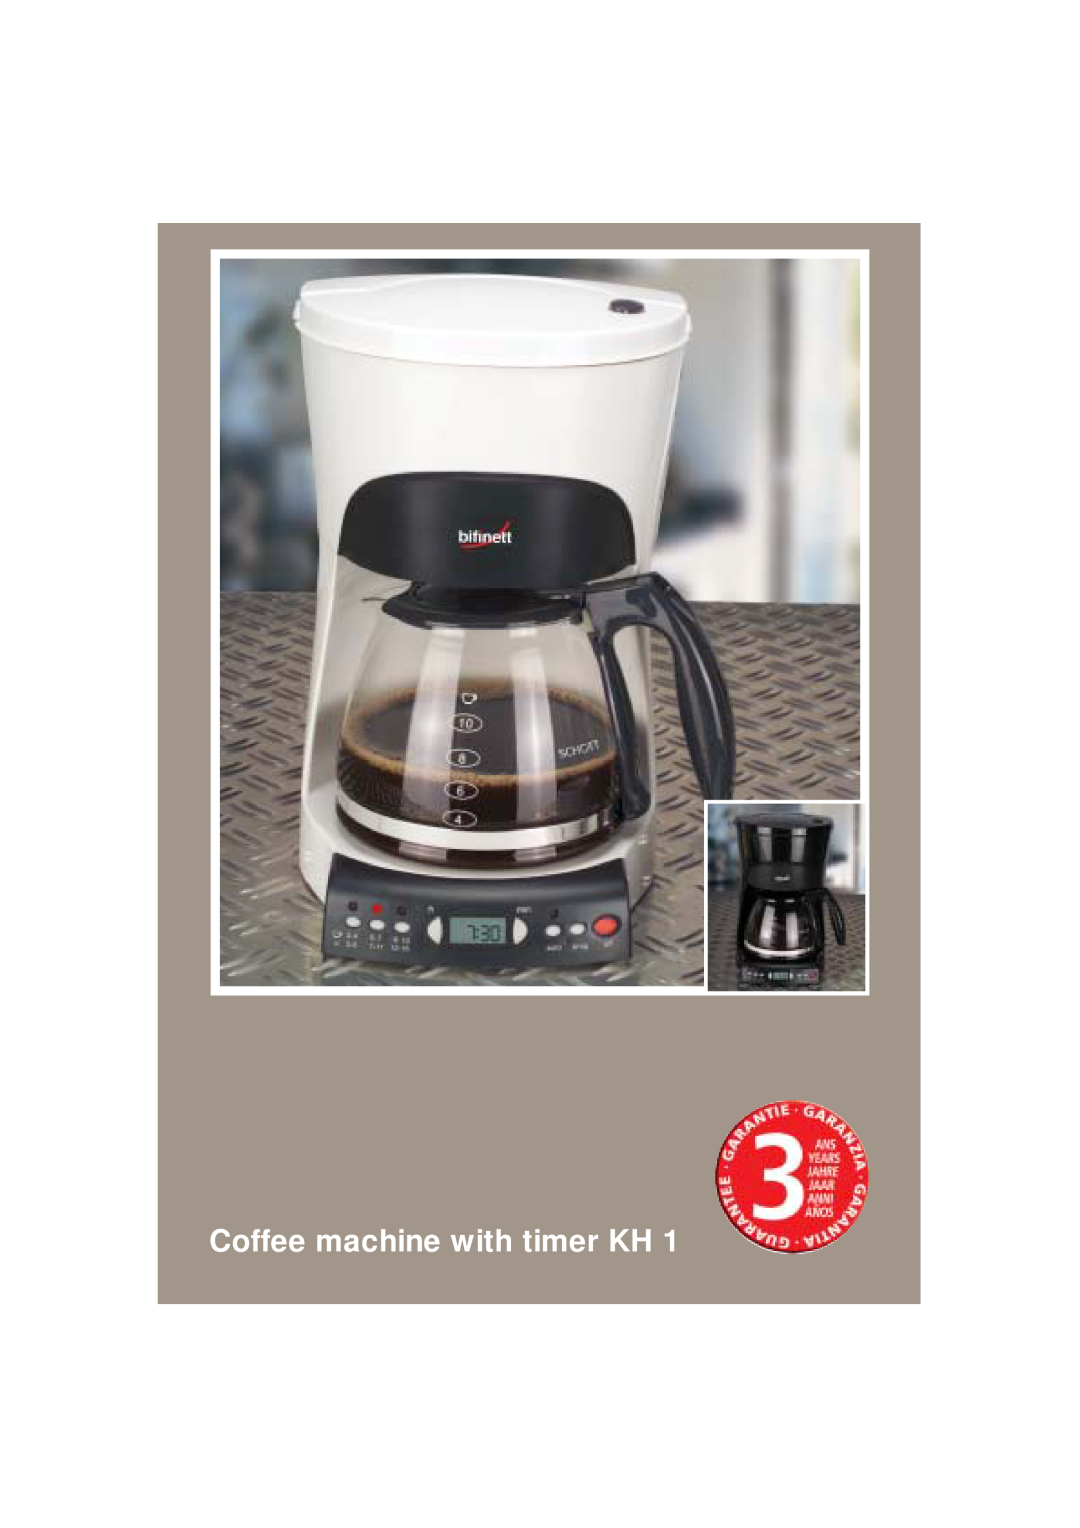 Kompernass KH 1 manual Coffee machine with timer KH 